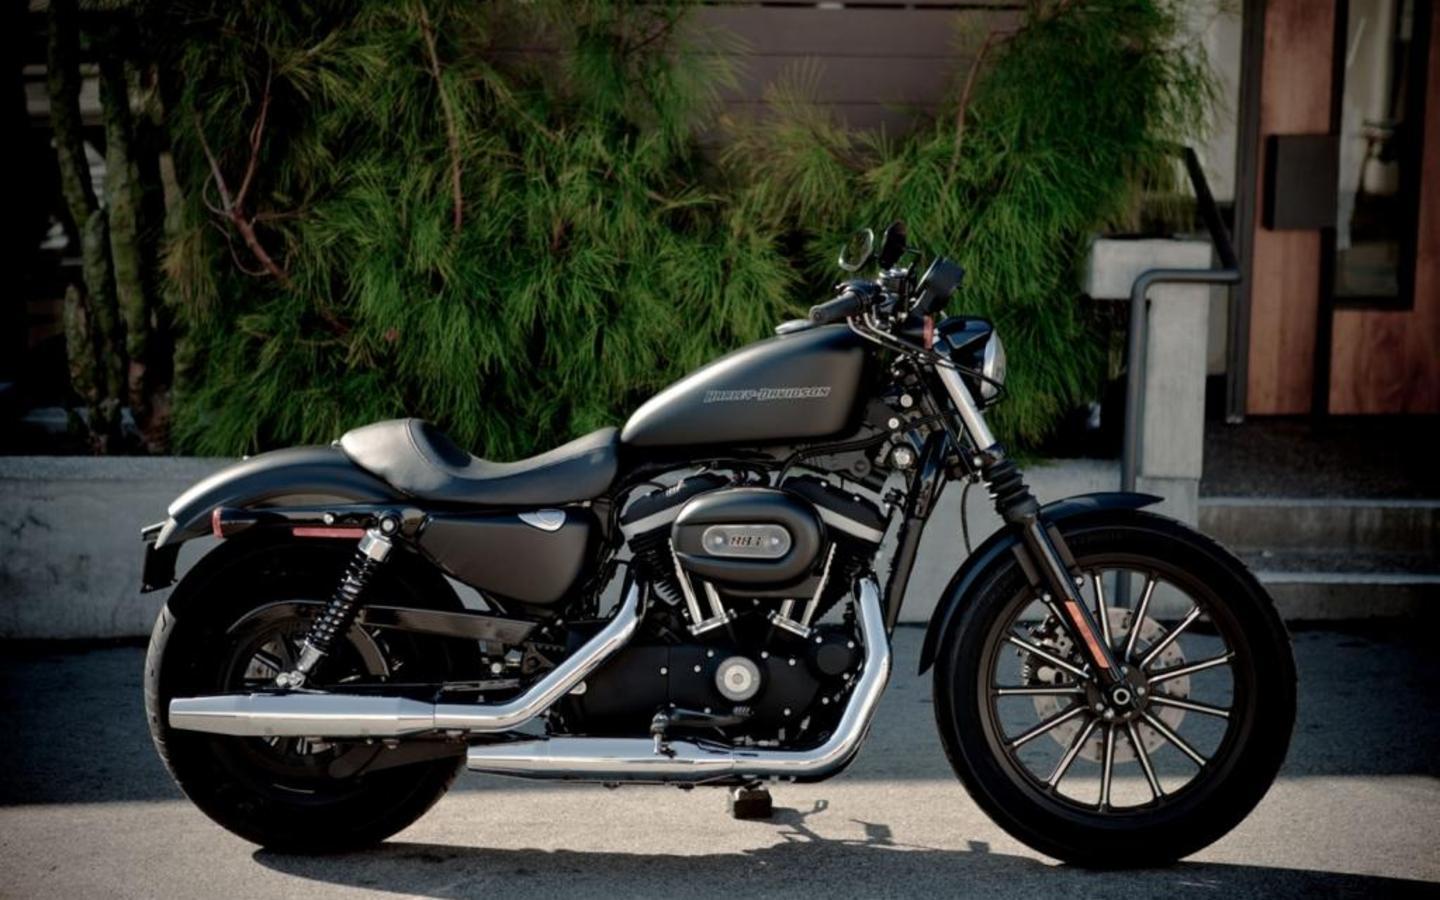 Harley Davidson Sportster 883 Image & Wallpaper